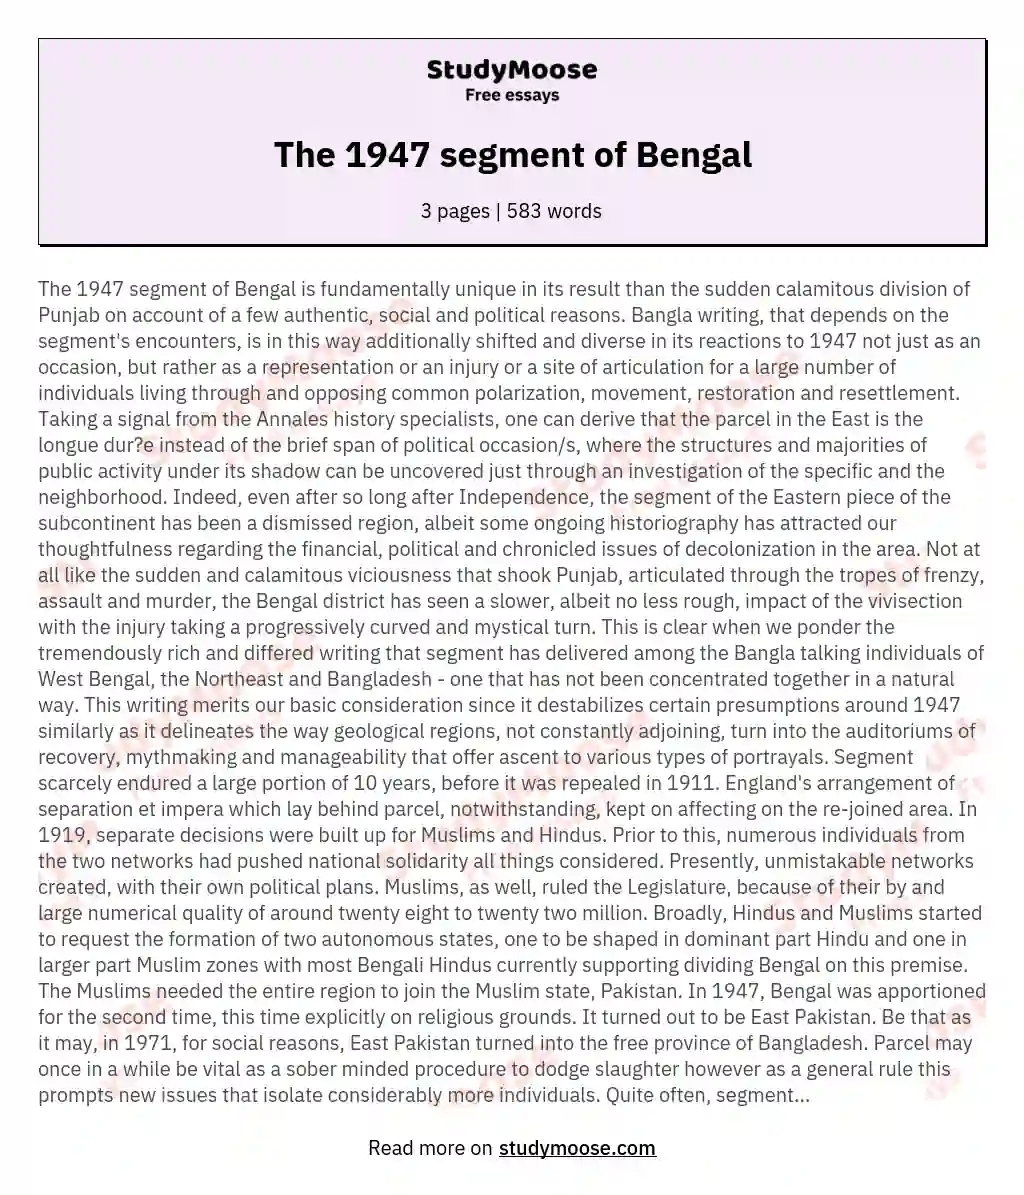 The 1947 segment of Bengal